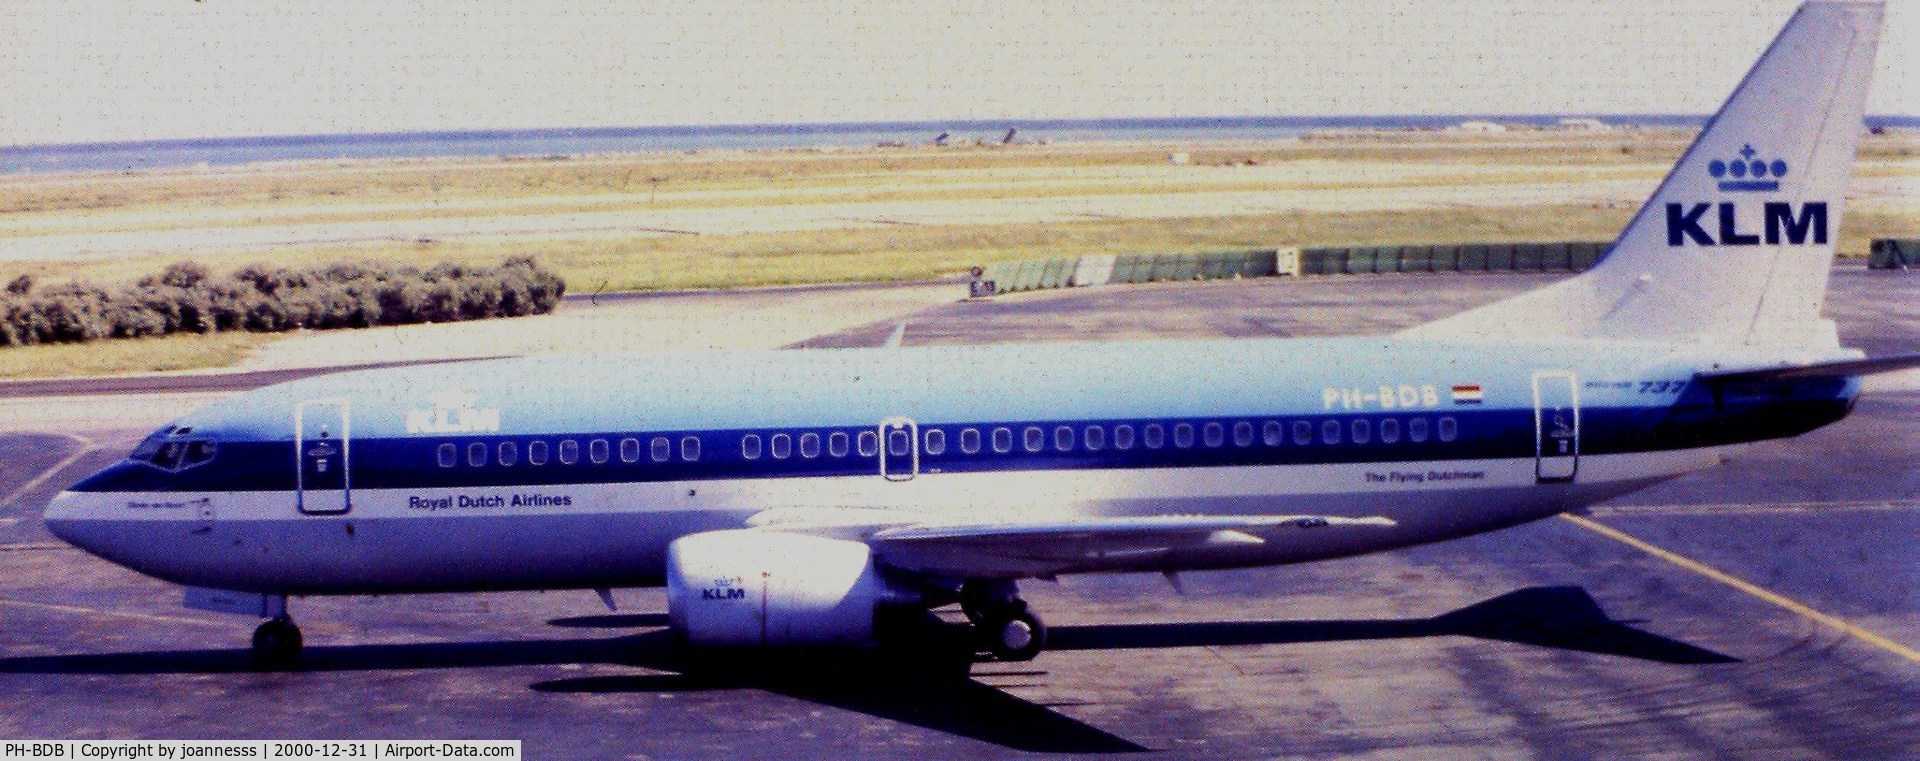 PH-BDB, 1986 Boeing 737-306 C/N 23538, Aéroport de Nice, France '80s